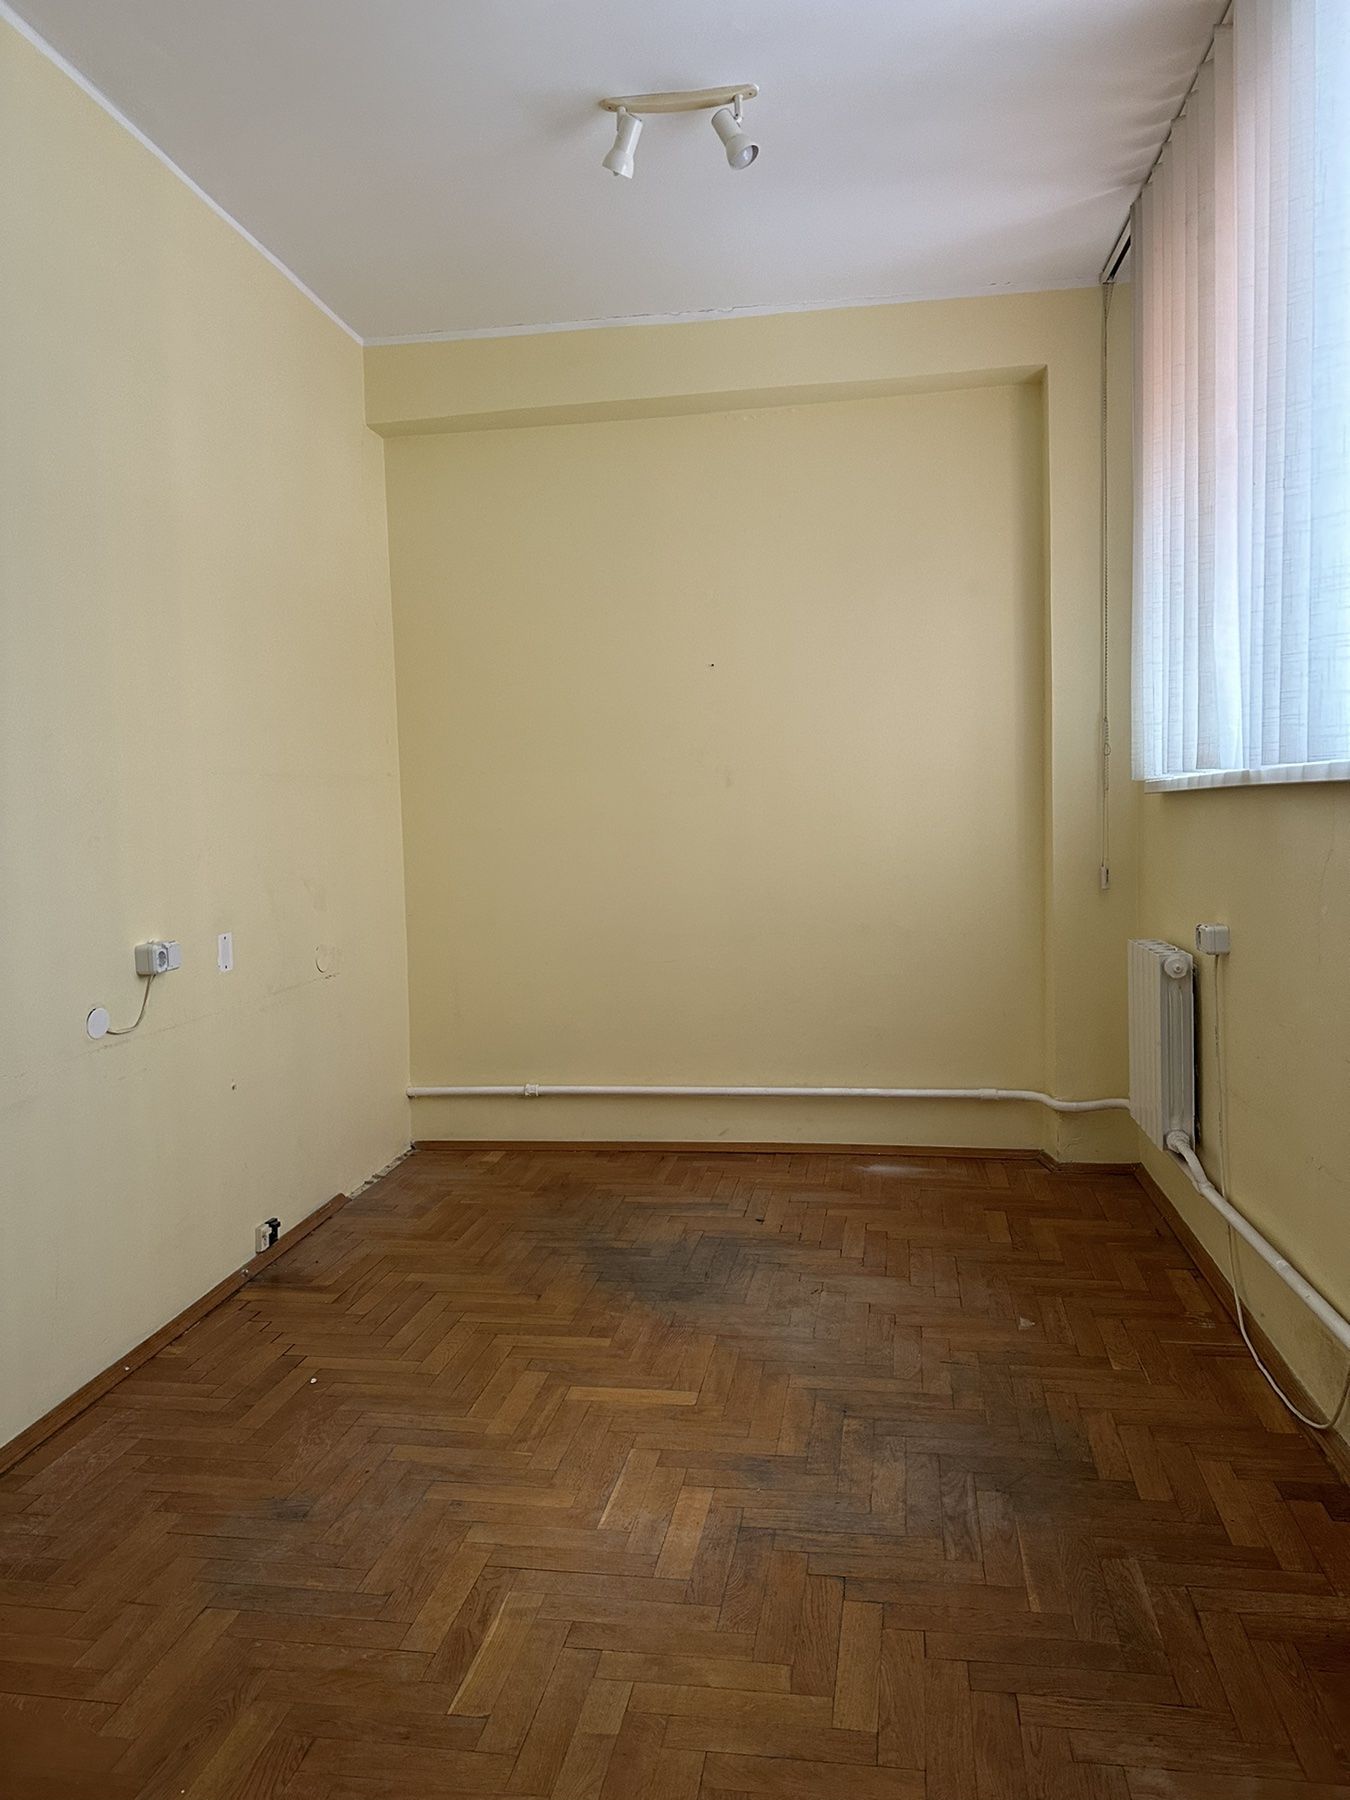  Нежилое помещение, W-6968022, Николаева Архитектора, 7, Киев - Фото 4